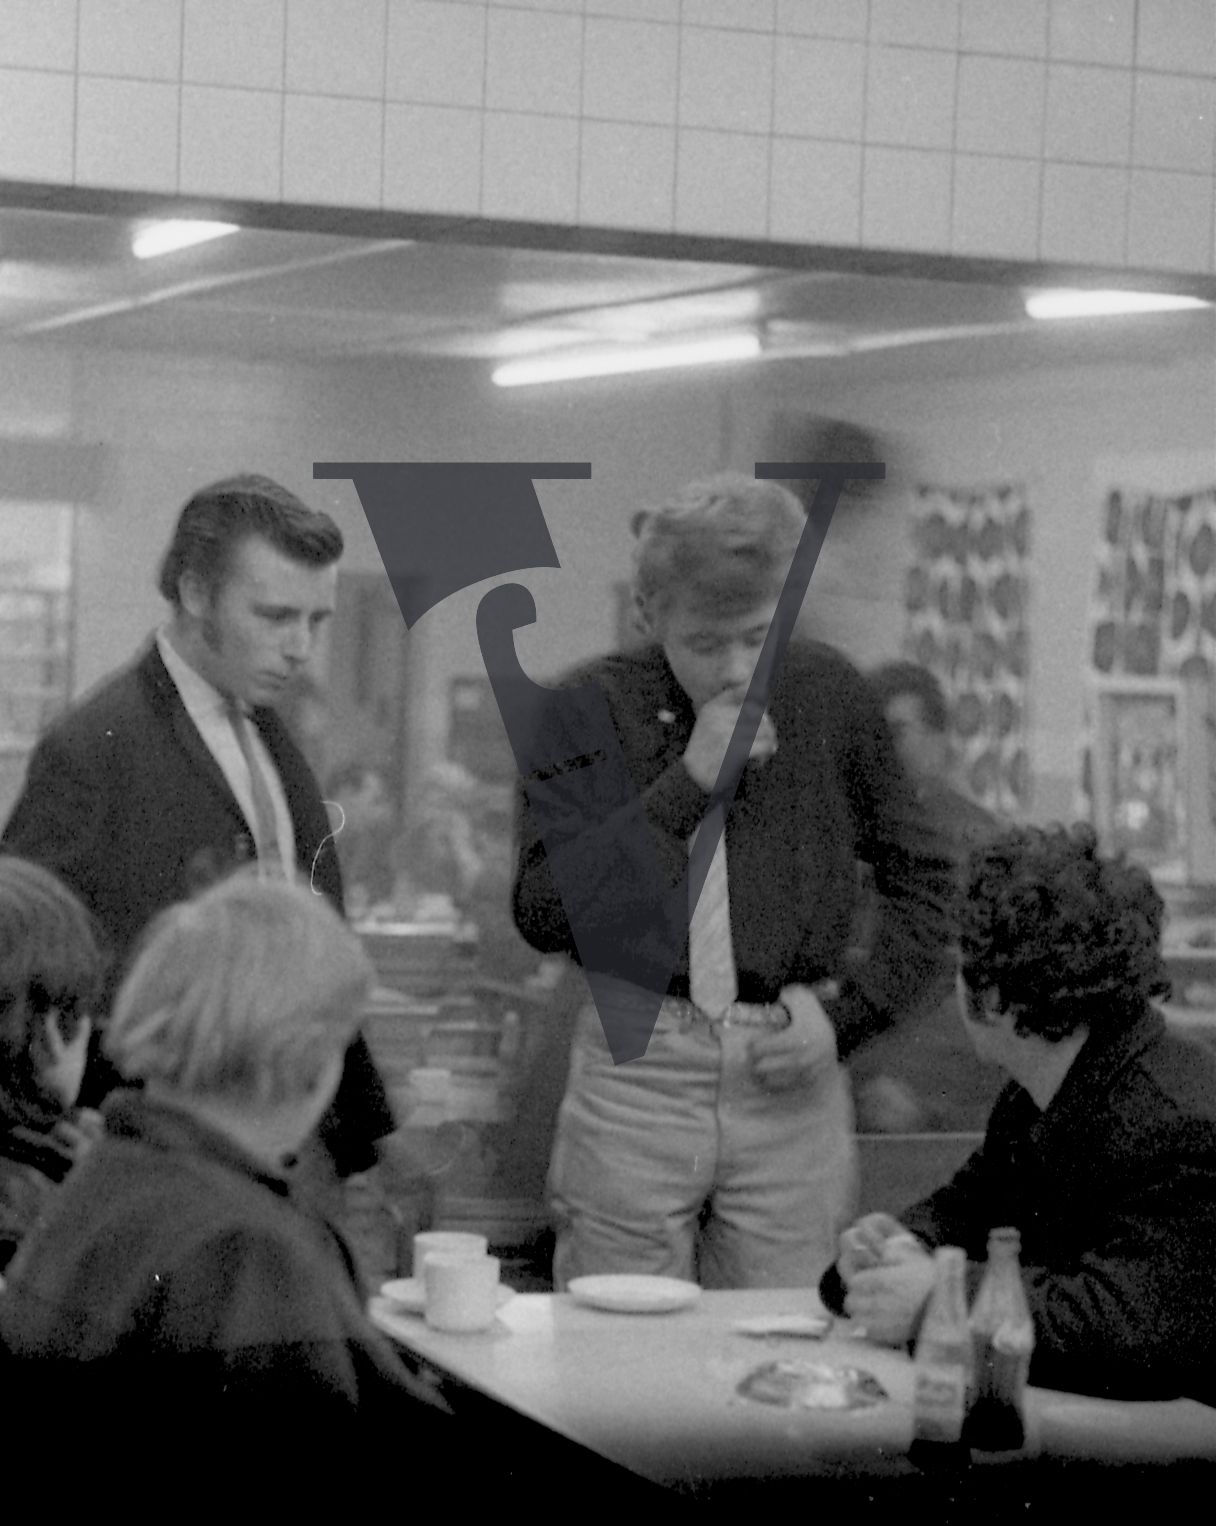 Chelsea Bridge Boys, teddy boys in cafe, smoking.